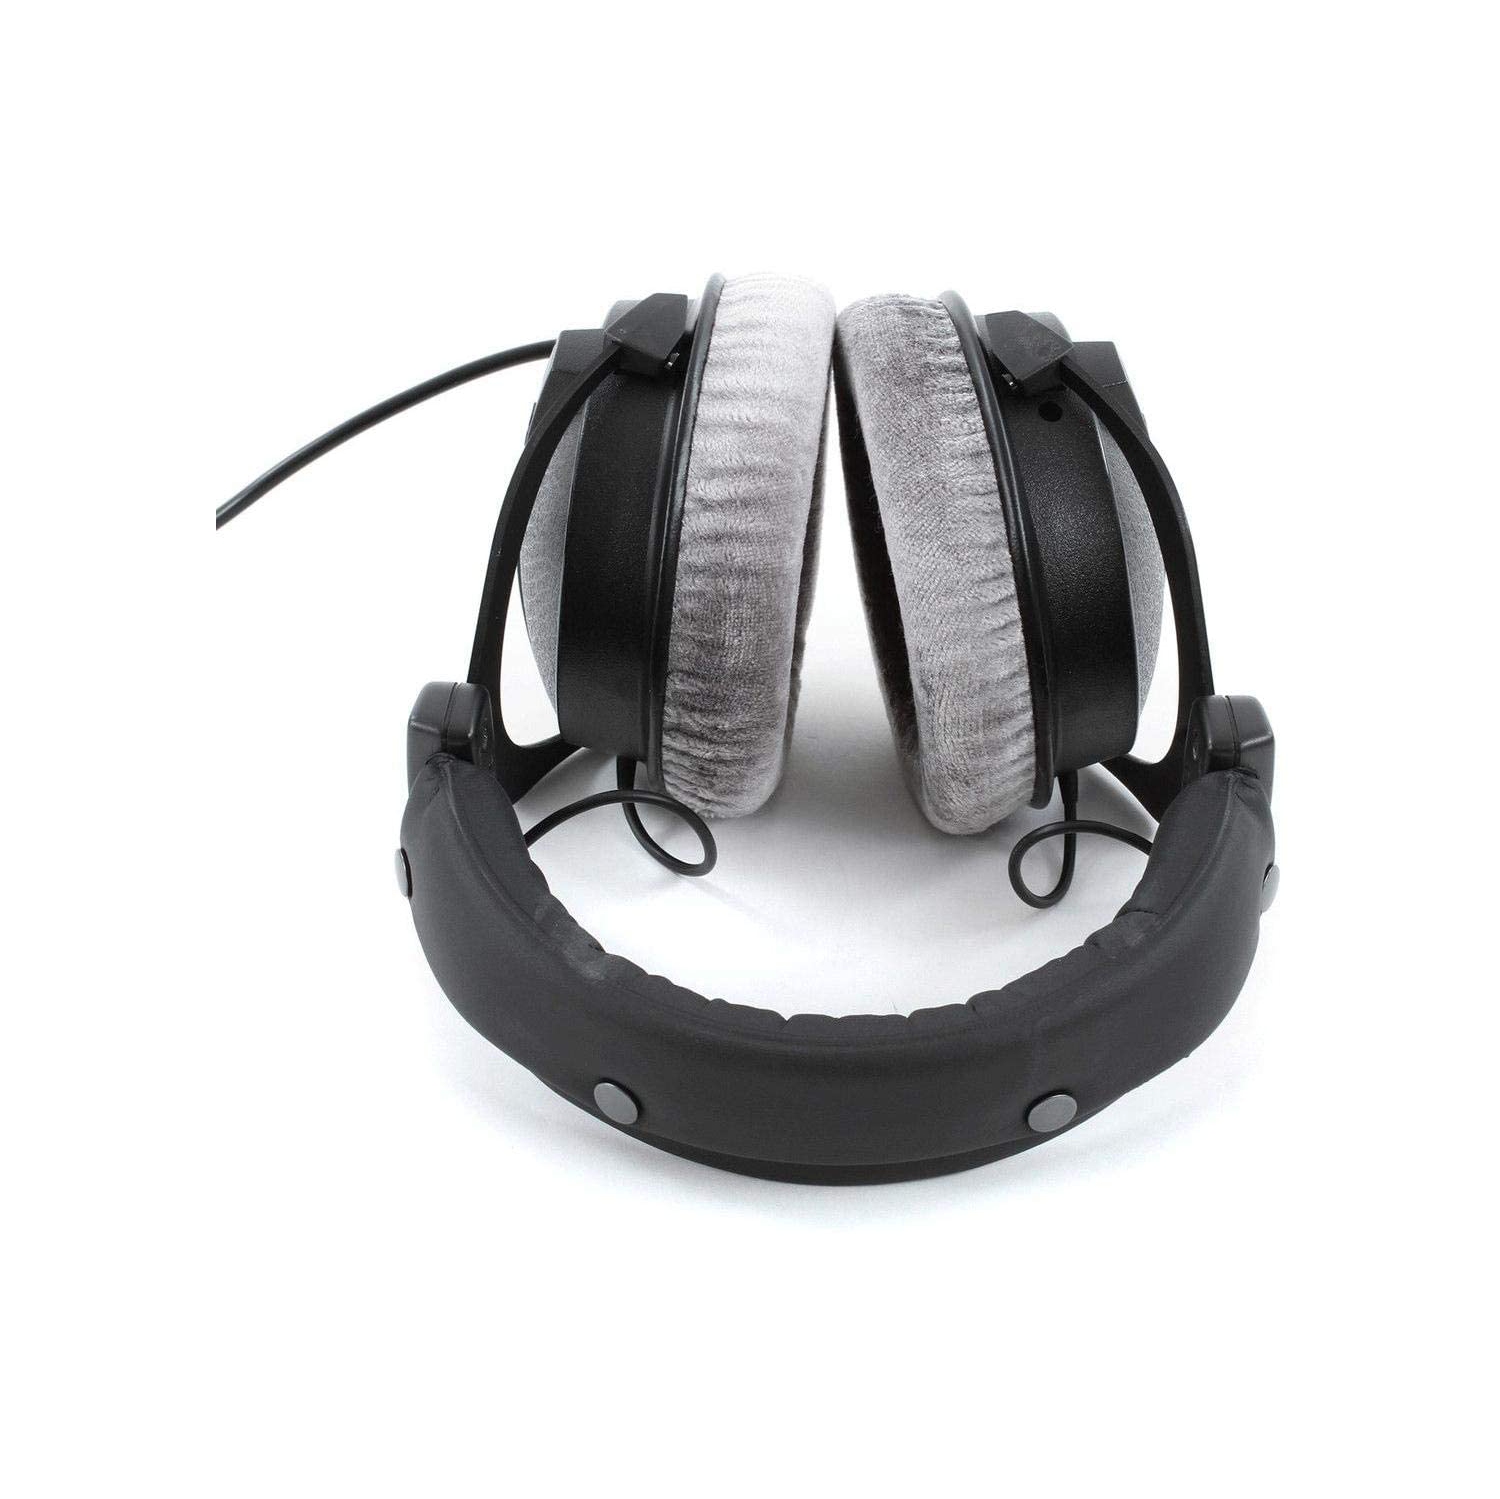 Beyerdynamic DT 770 PRO 250 Ohms Headphones | Best Buy Canada